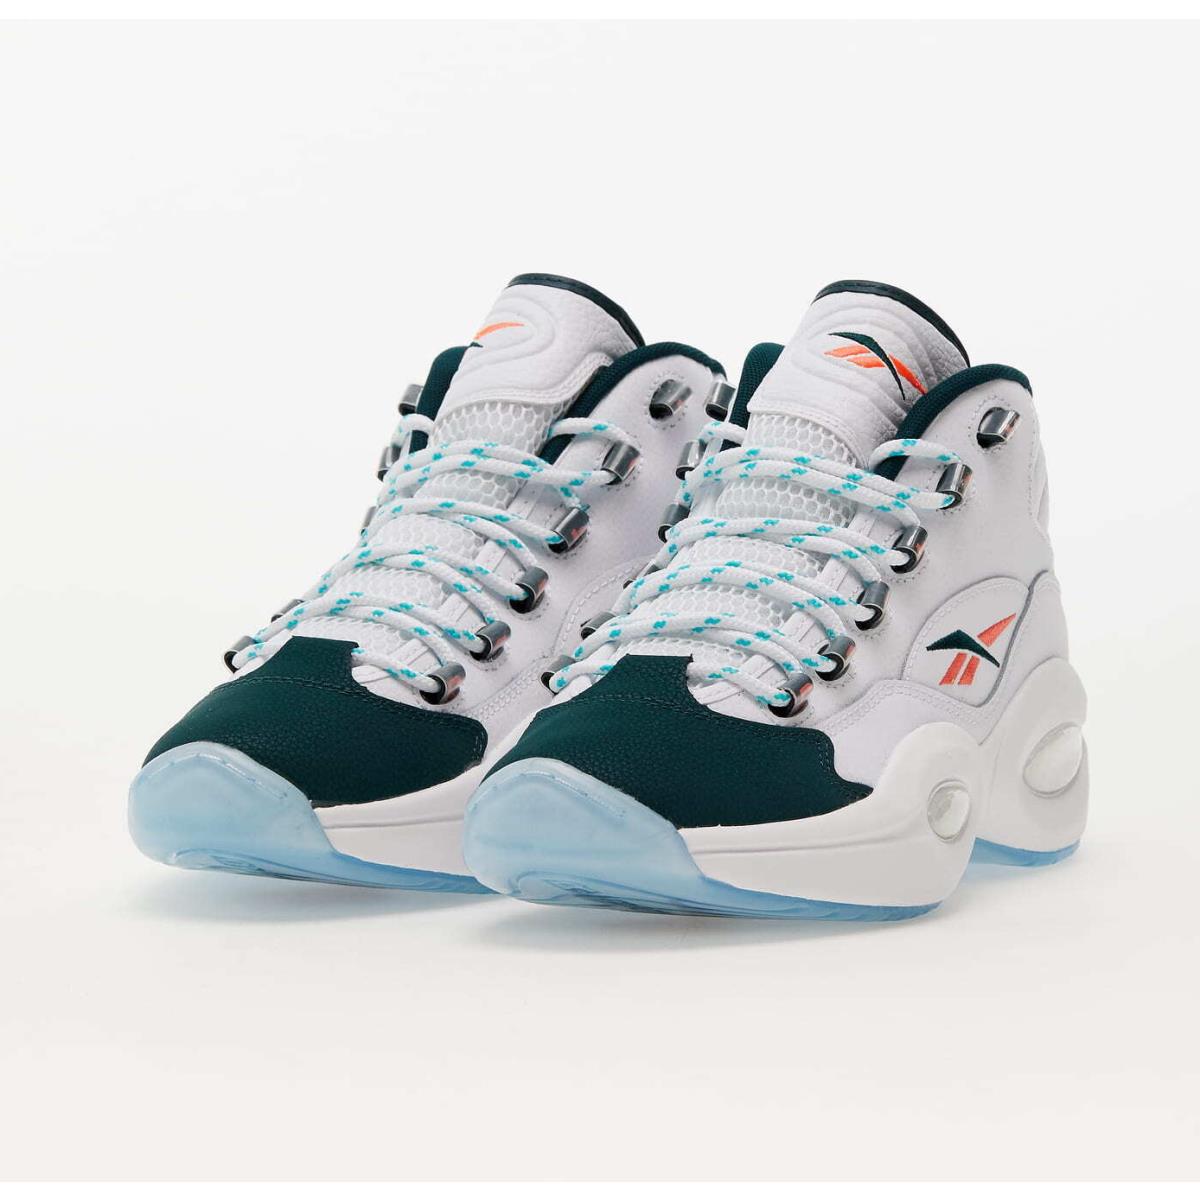 Reebok Question Mid Miami GW8857 White Green Basketball Shoes Sneakers